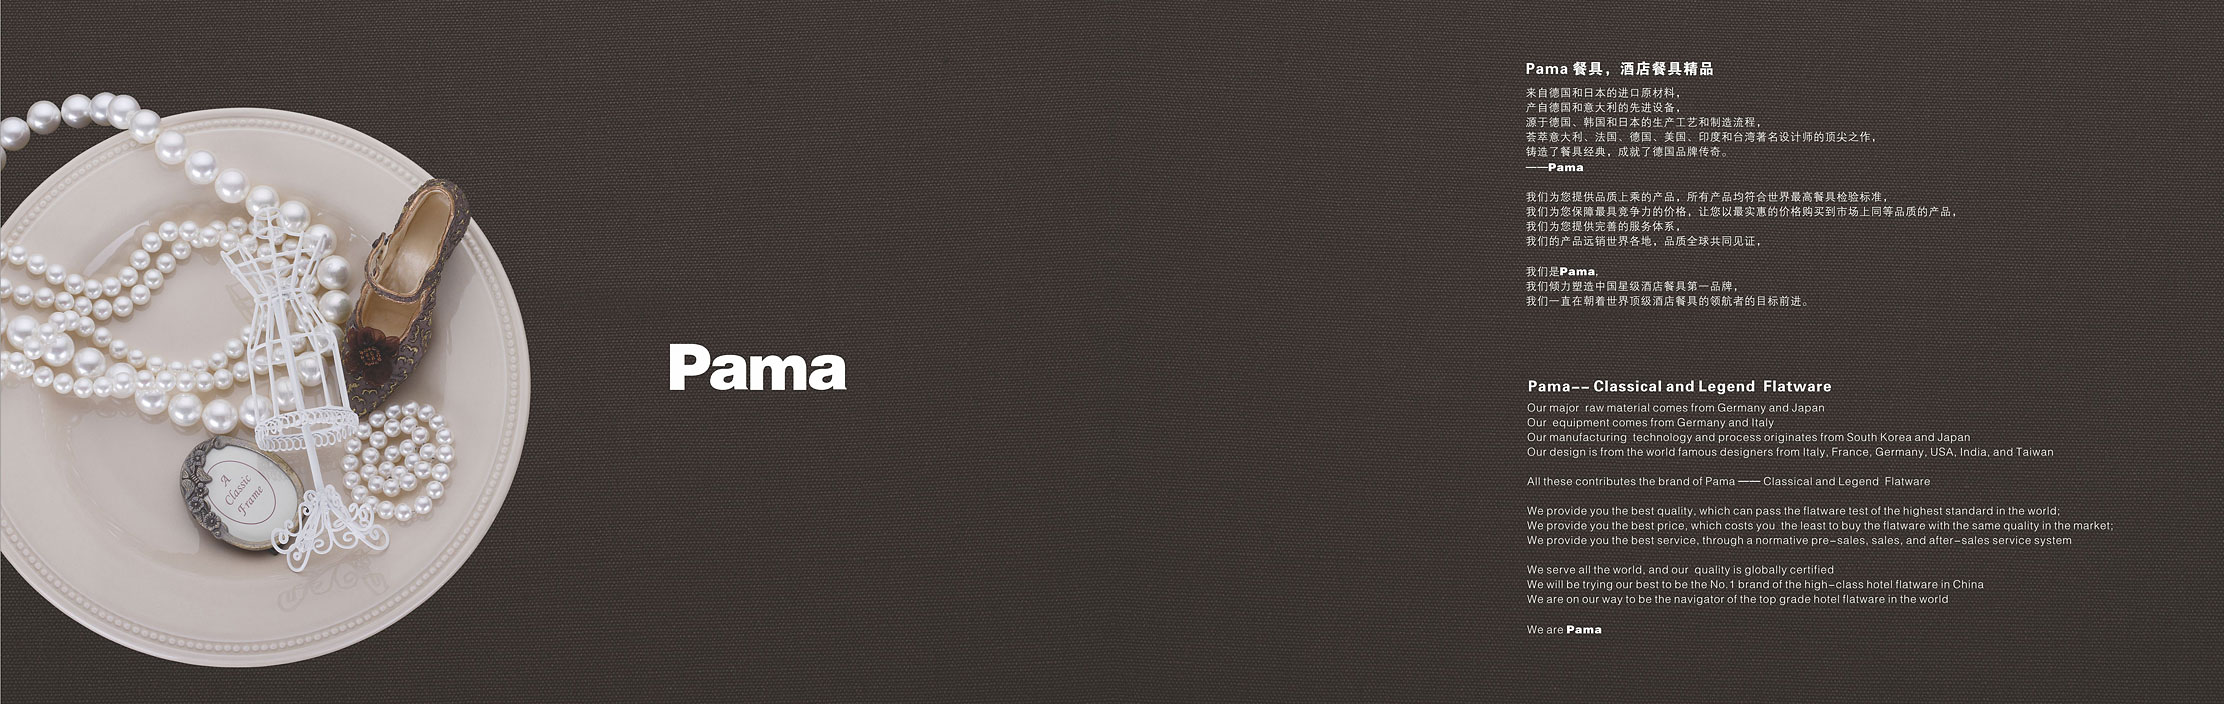 Pama-banner02